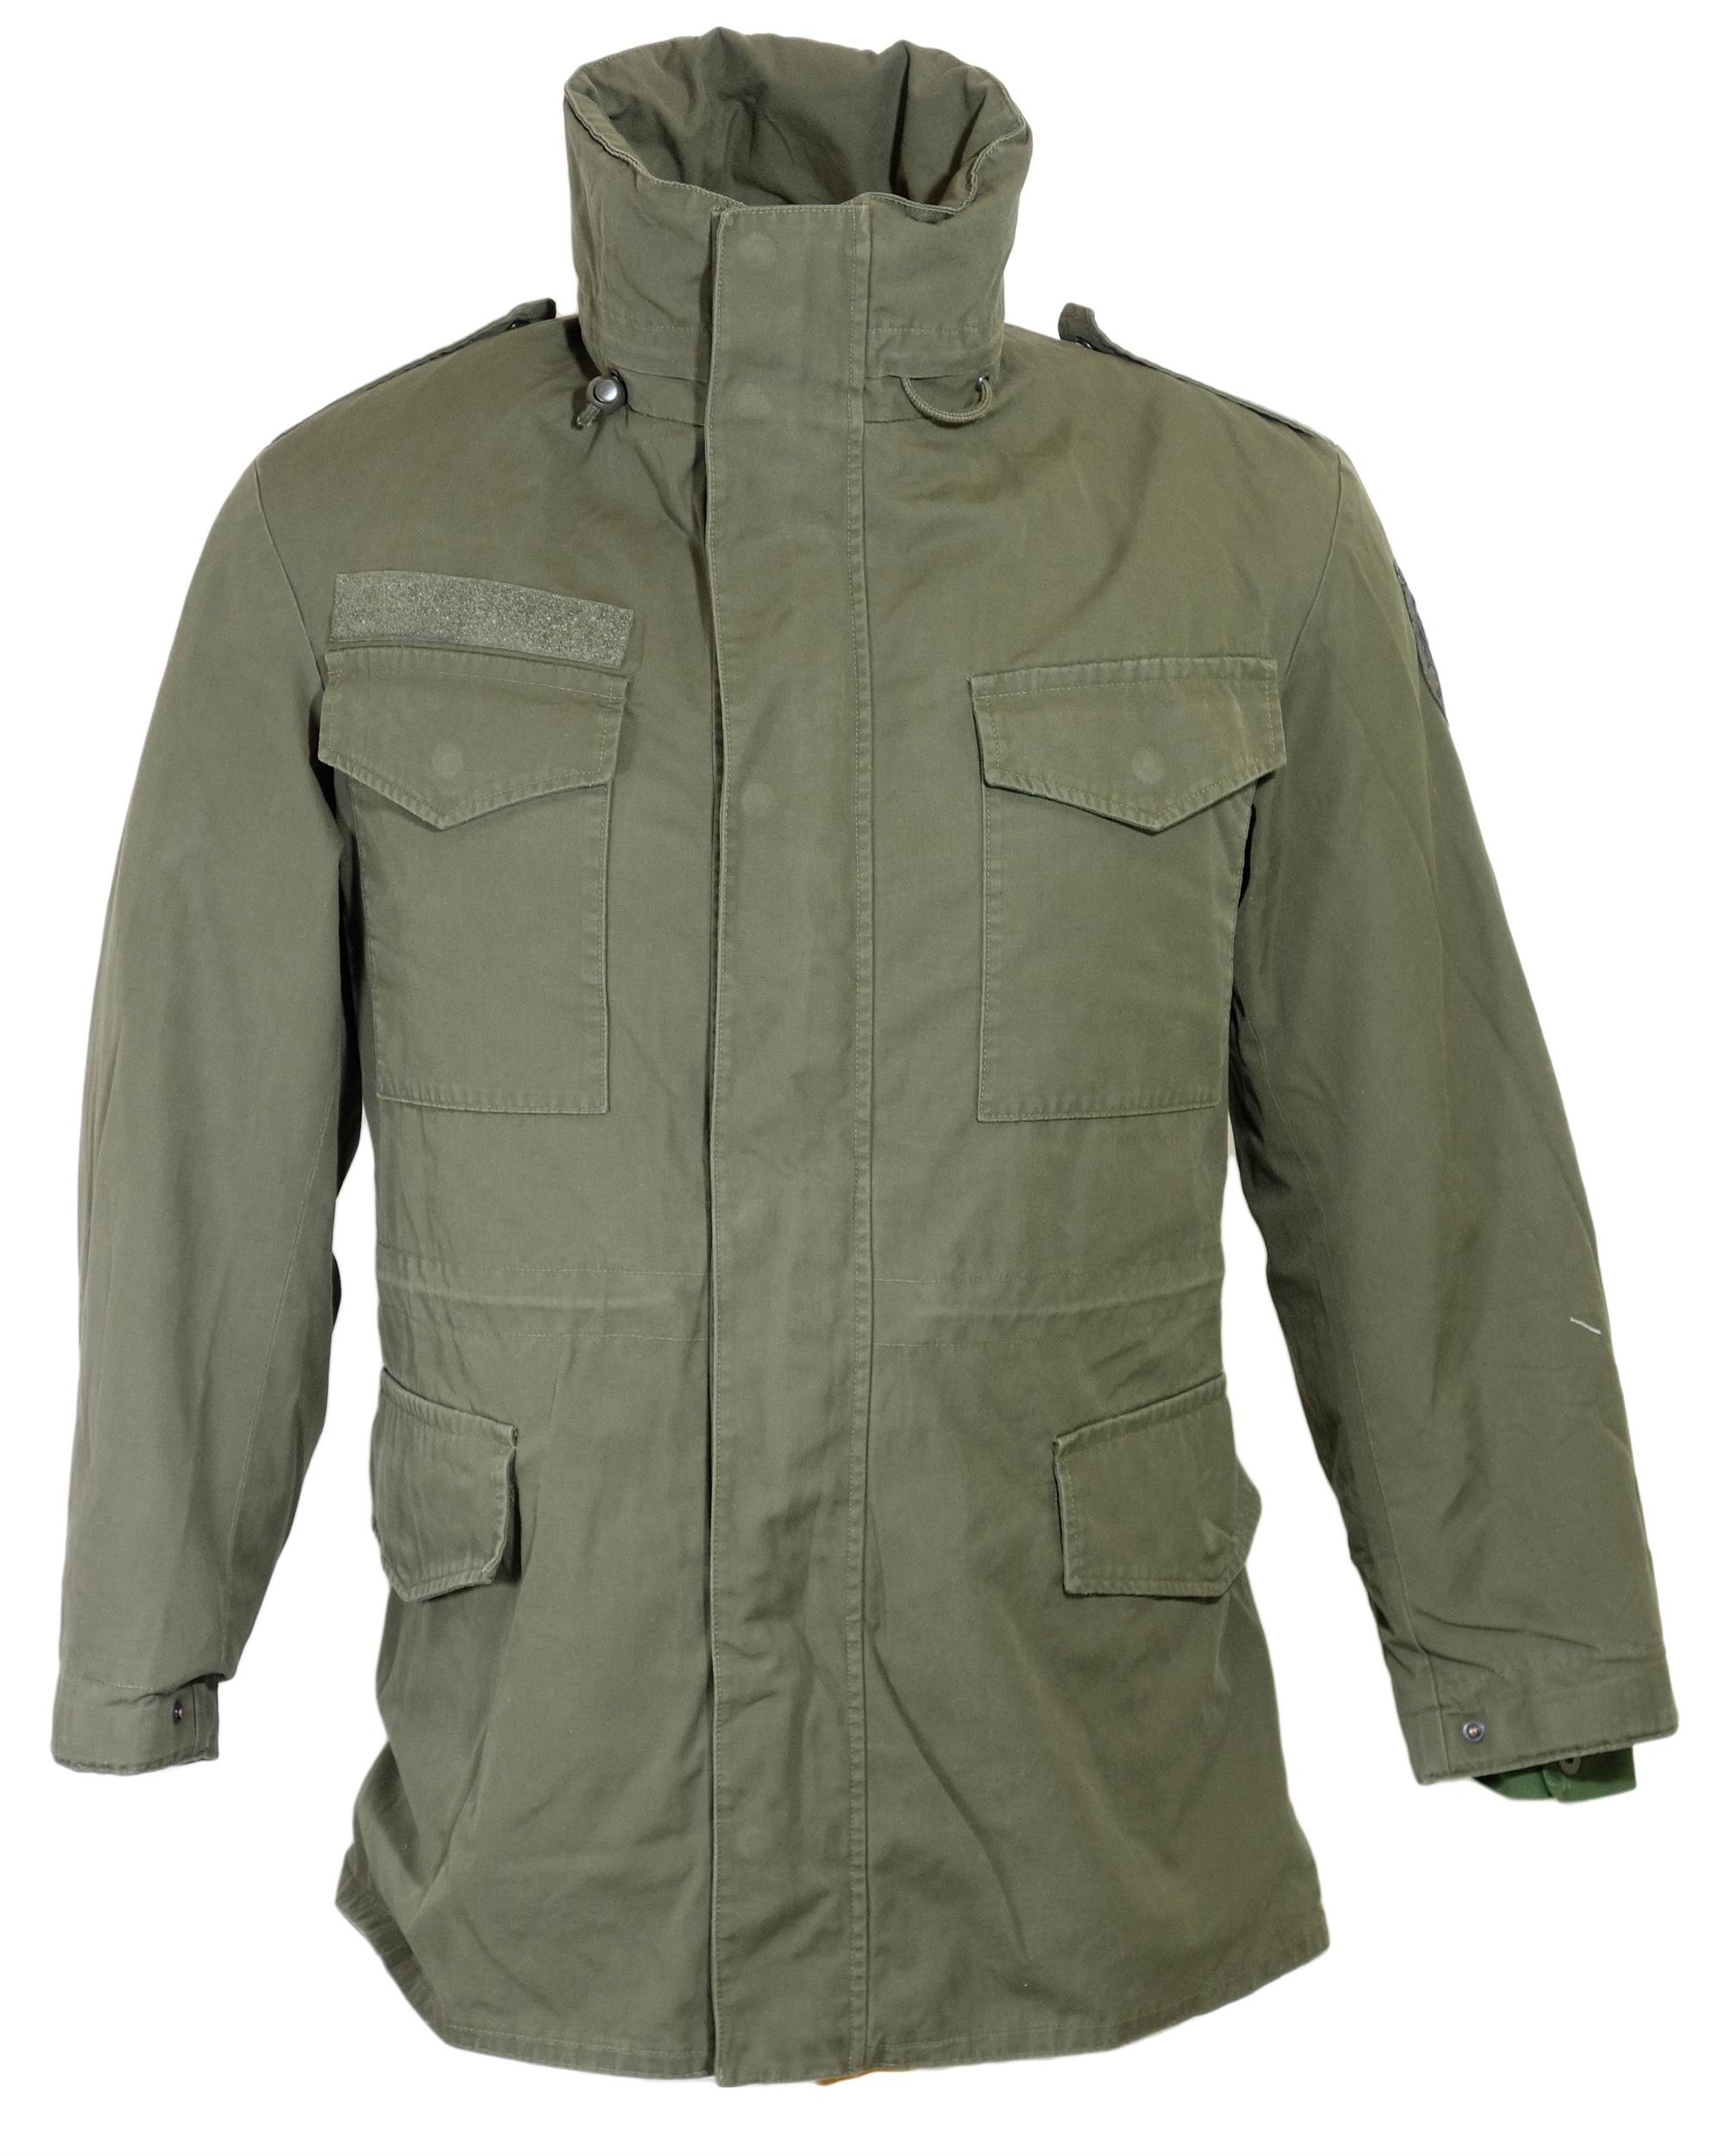 Austrian Army Surplus Wet Weather Parka Jacket Hooded Surplus & Lost